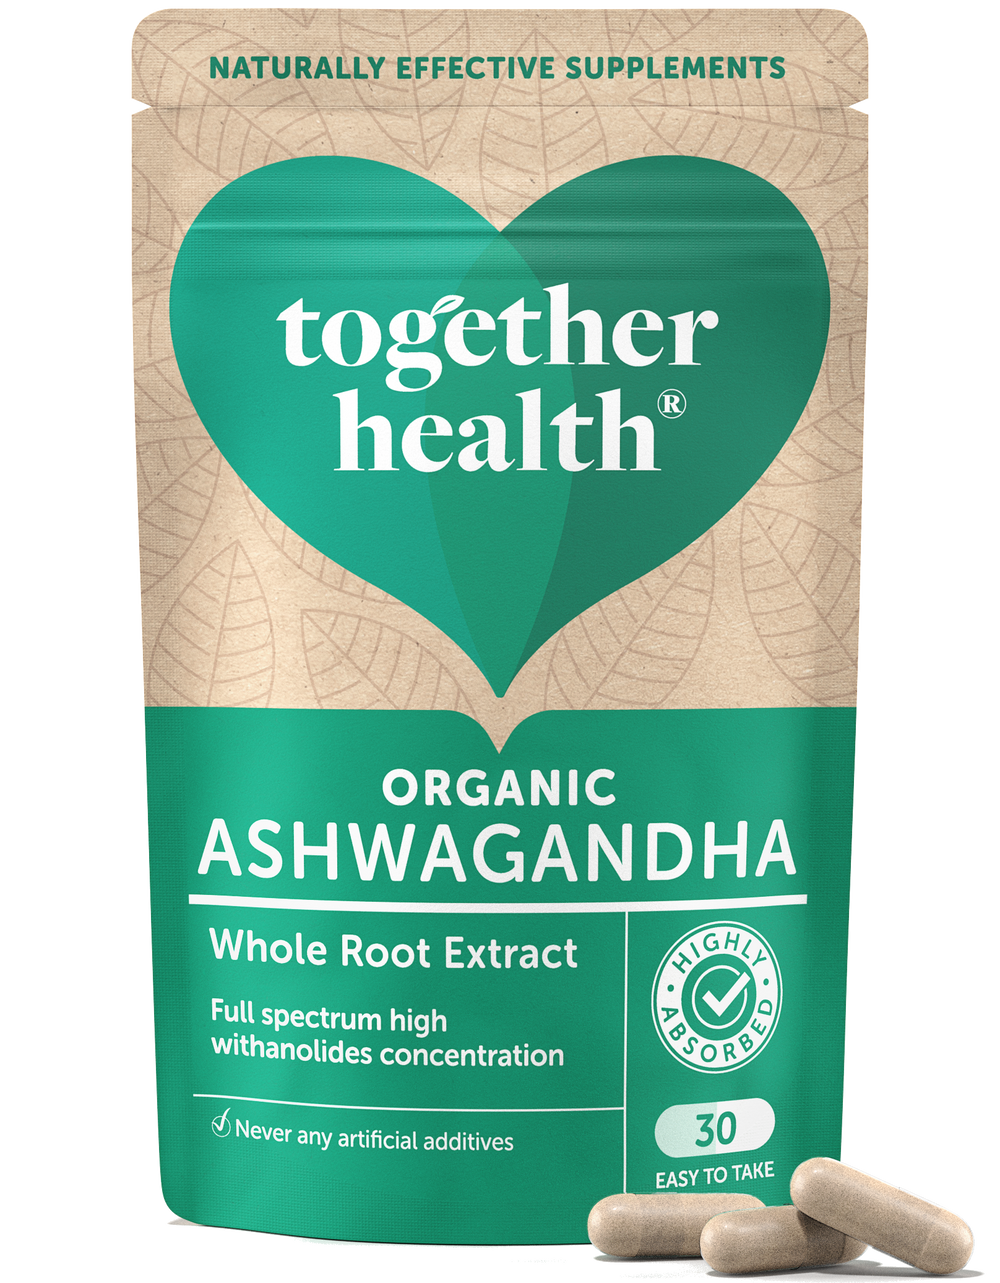 Ashwagandha Supplement – Organic and Vegan - Eco Friendly Supplement